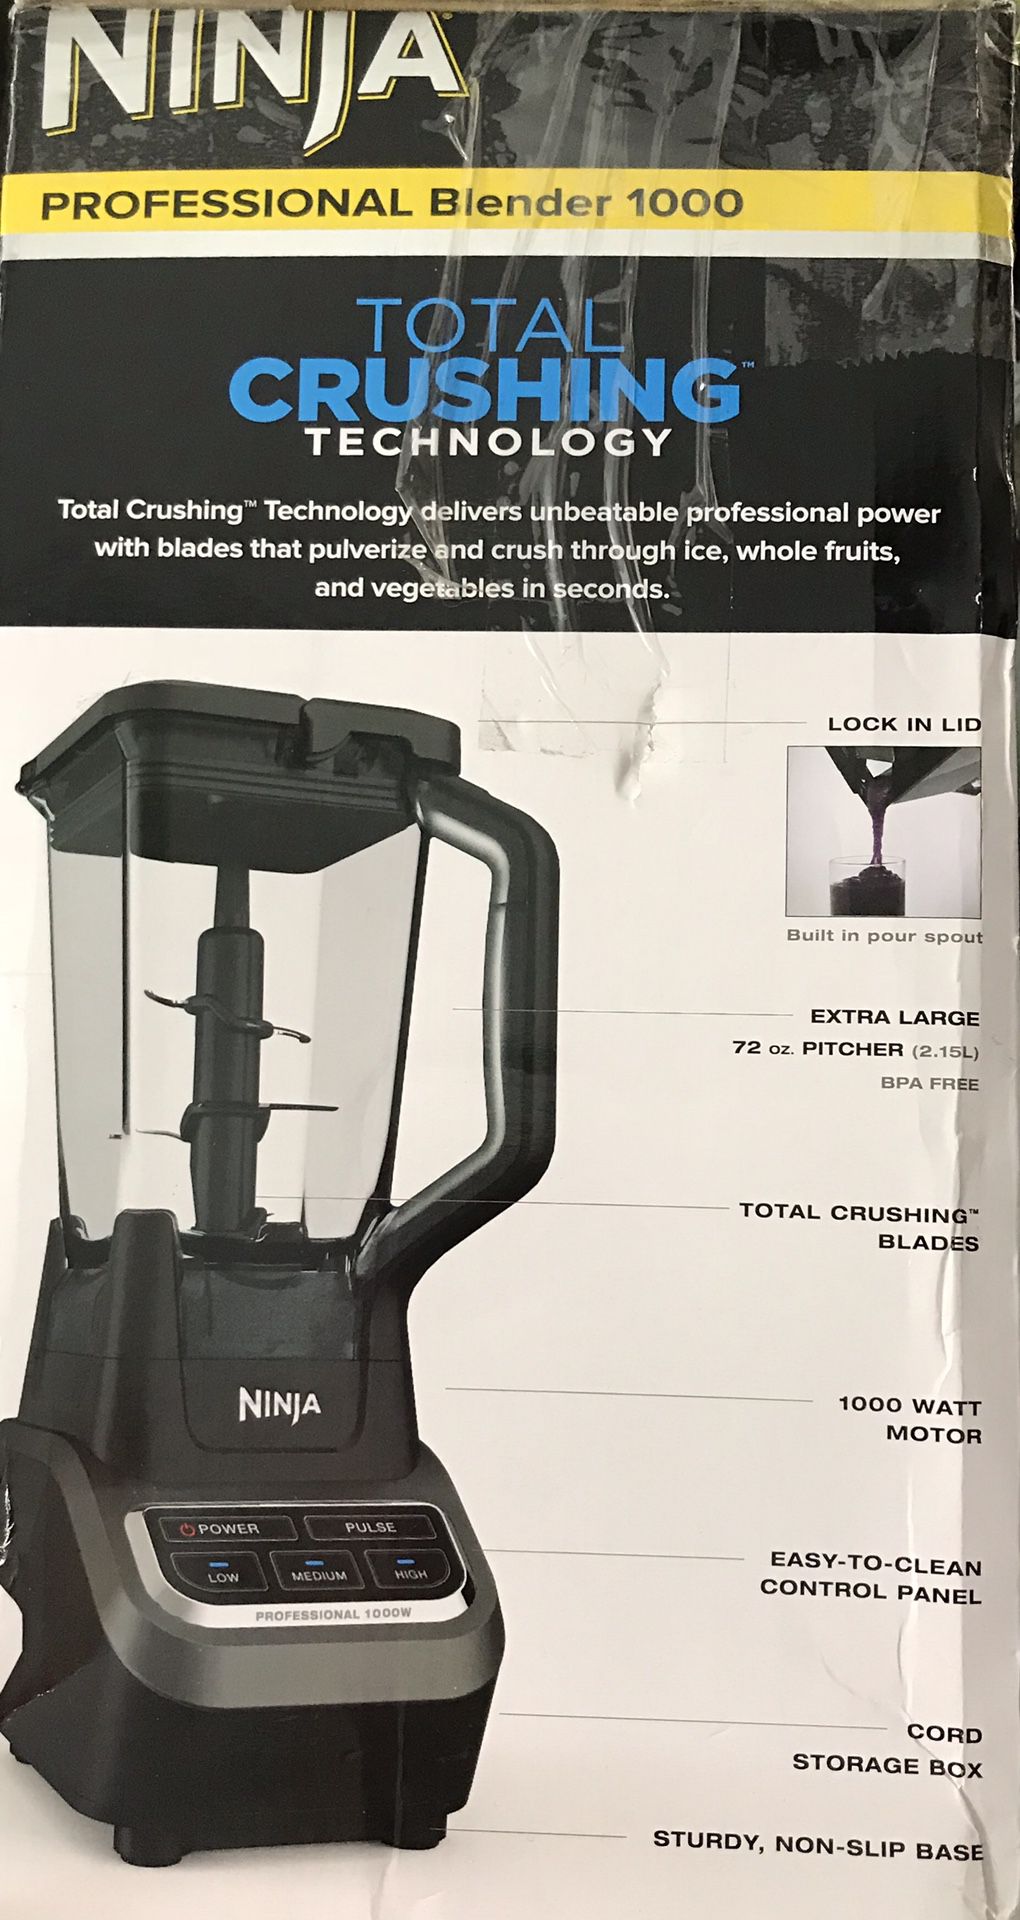 ninja professional blender 1000 for Sale in Santa Ana, CA - OfferUp